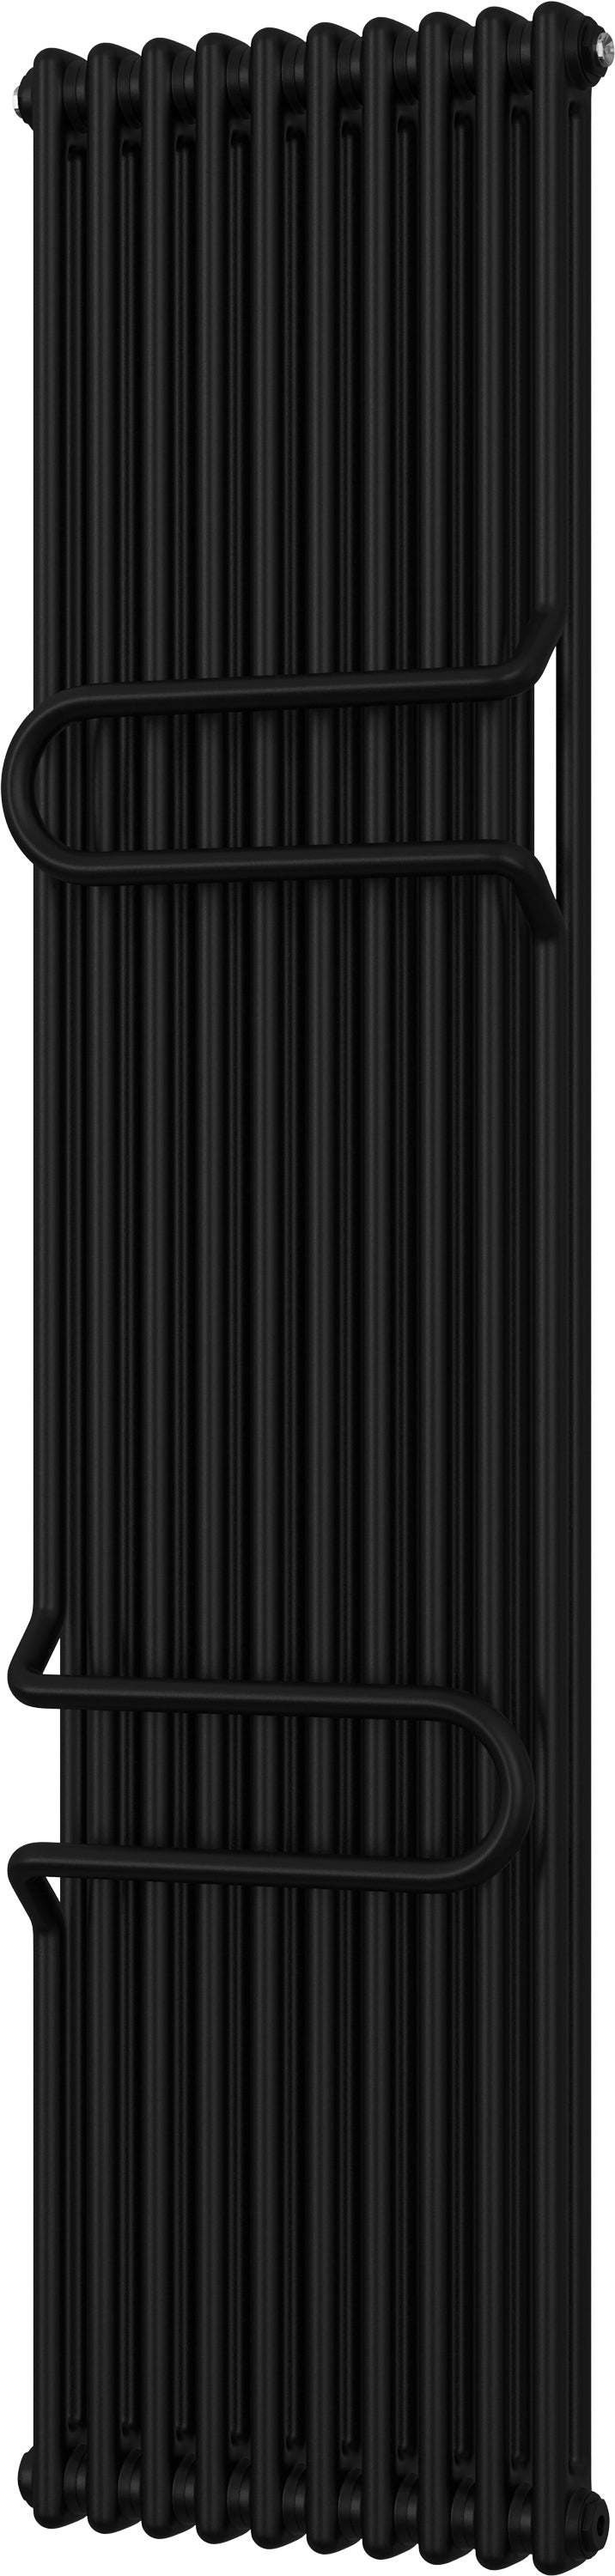 Alpha - Black Vertical Towel Bar Column Radiator H1800mm x W460mm 2 Column